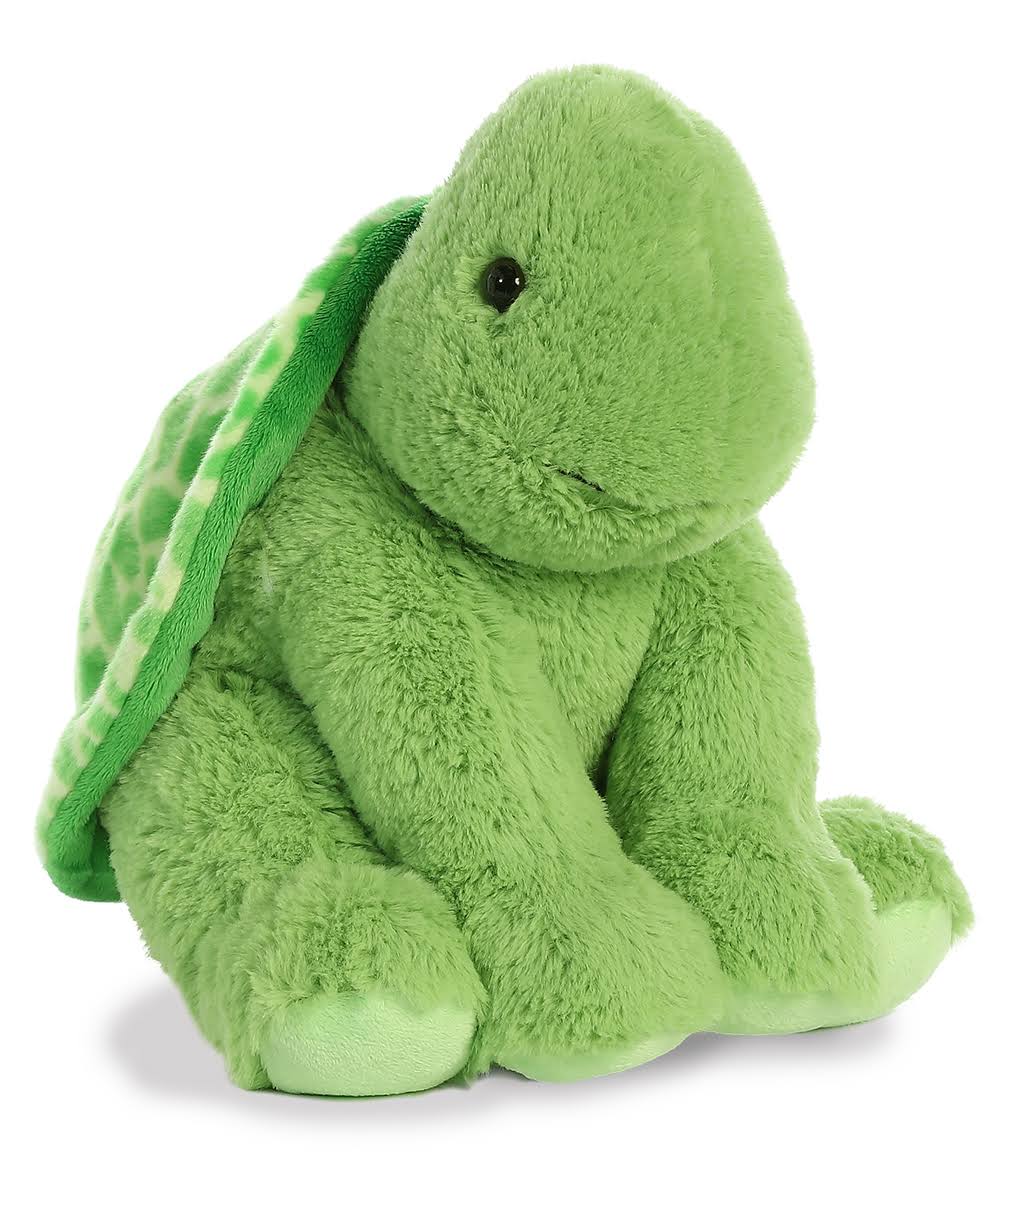 Aurora Stuffed Animal Turtle Plush Toy - 11"